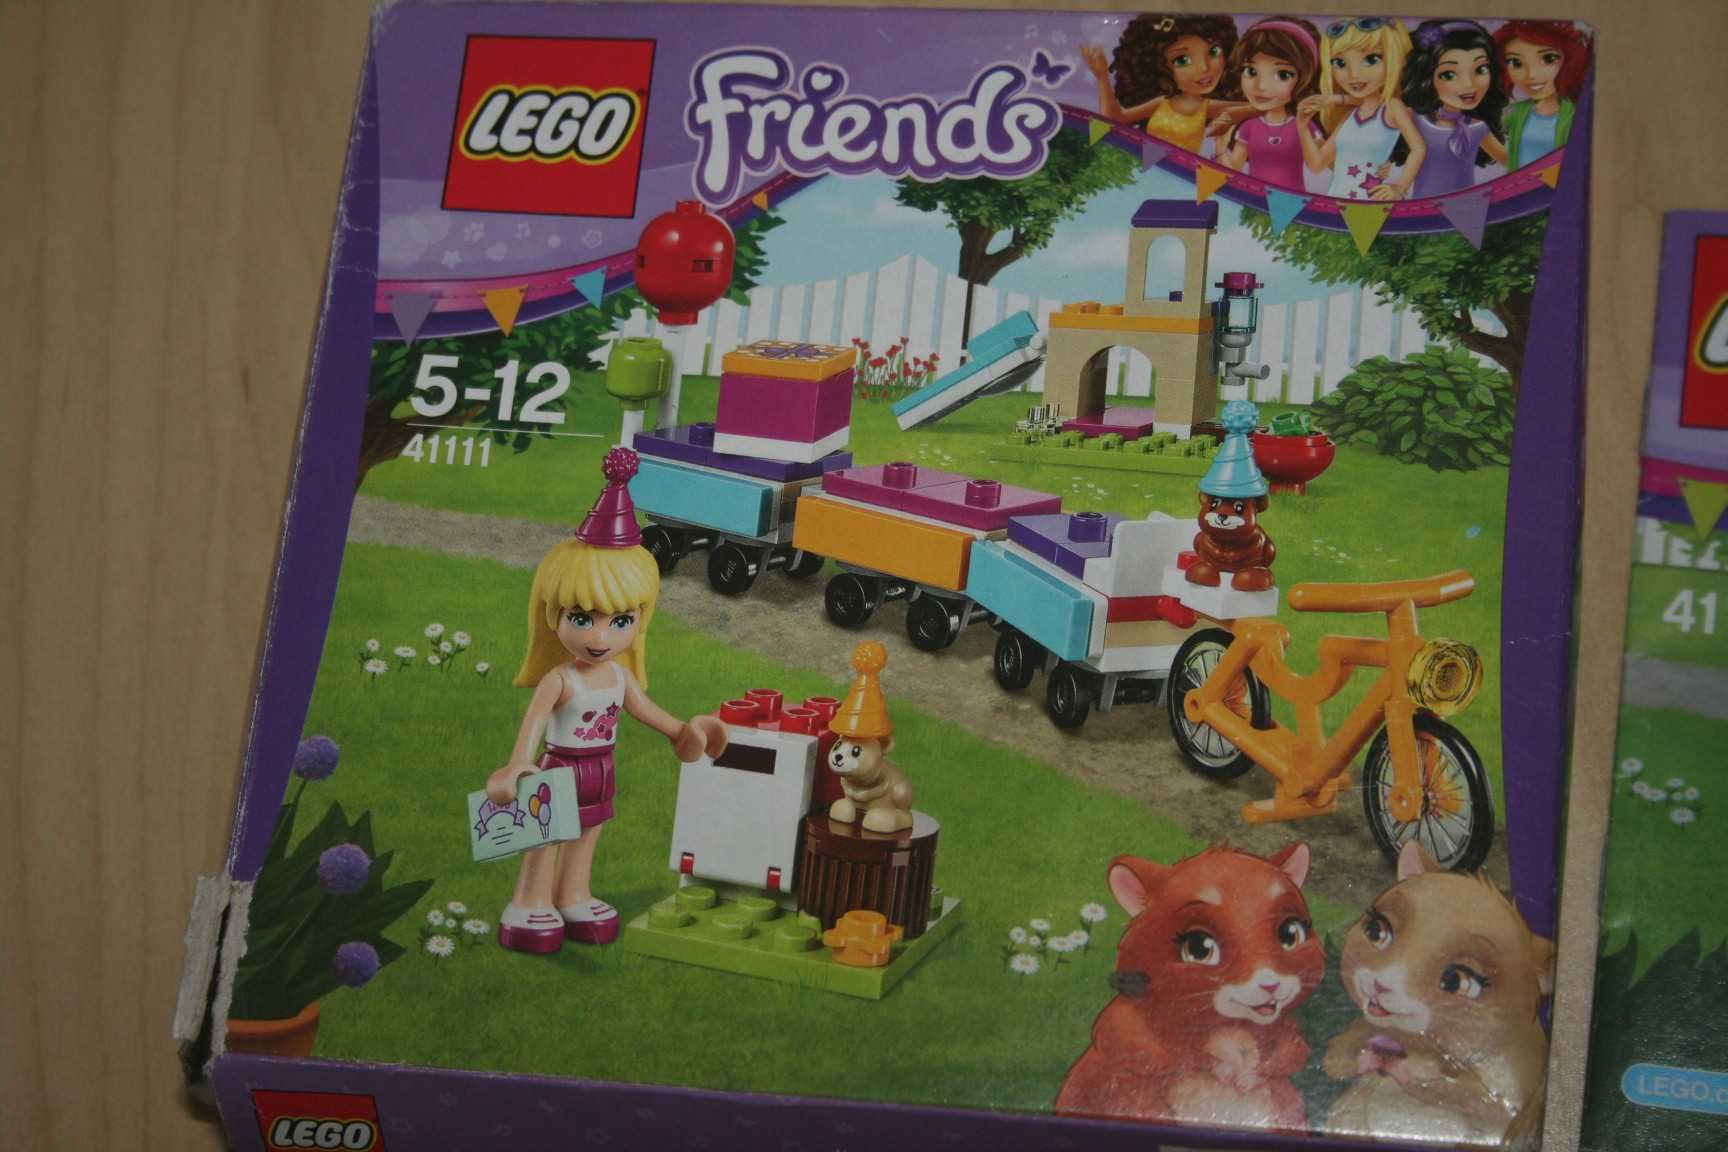 LEGO friends 41111